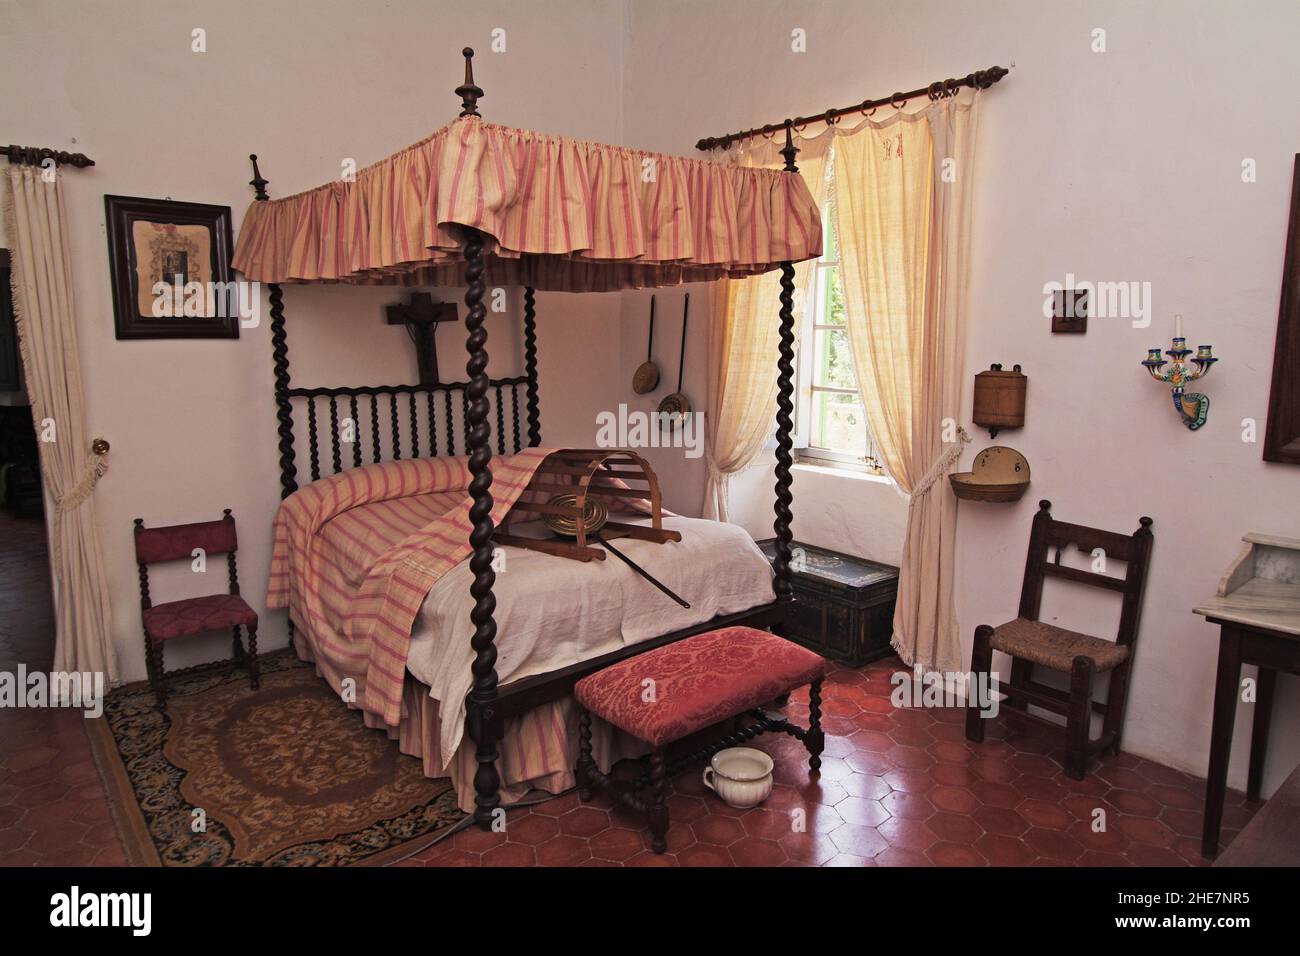 La Granja, ehemaliges Gutshaus als Museum, mallorquinisches Schlafzimmer im Barockstil, Espolores, in den Tramuntana Bergen, Mallorca, Balearen, Spani Stock Photo